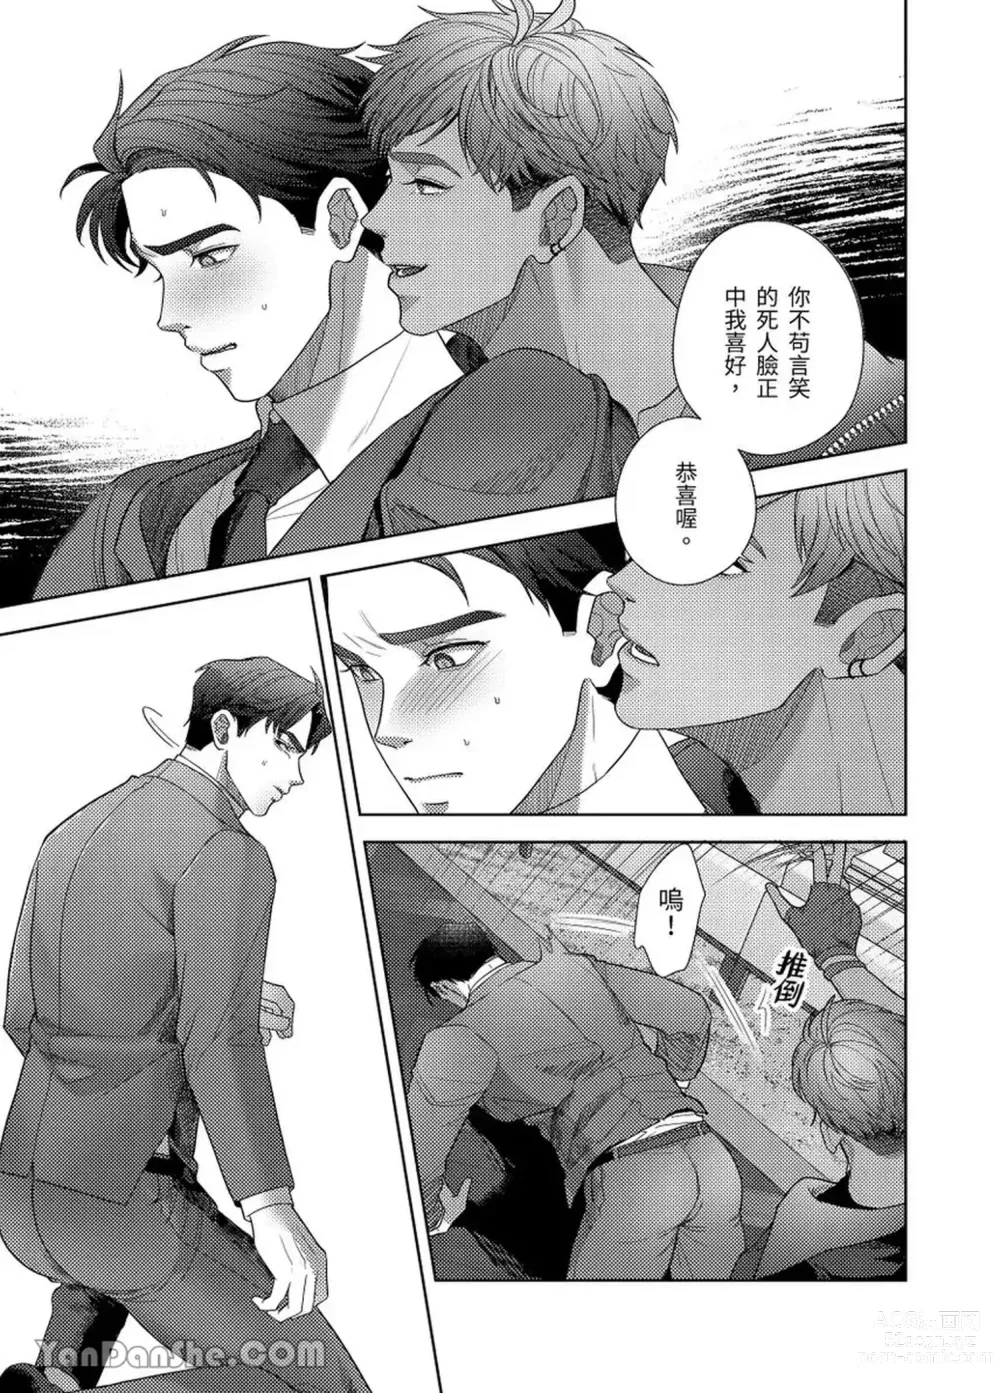 Page 12 of manga Dom&Sub